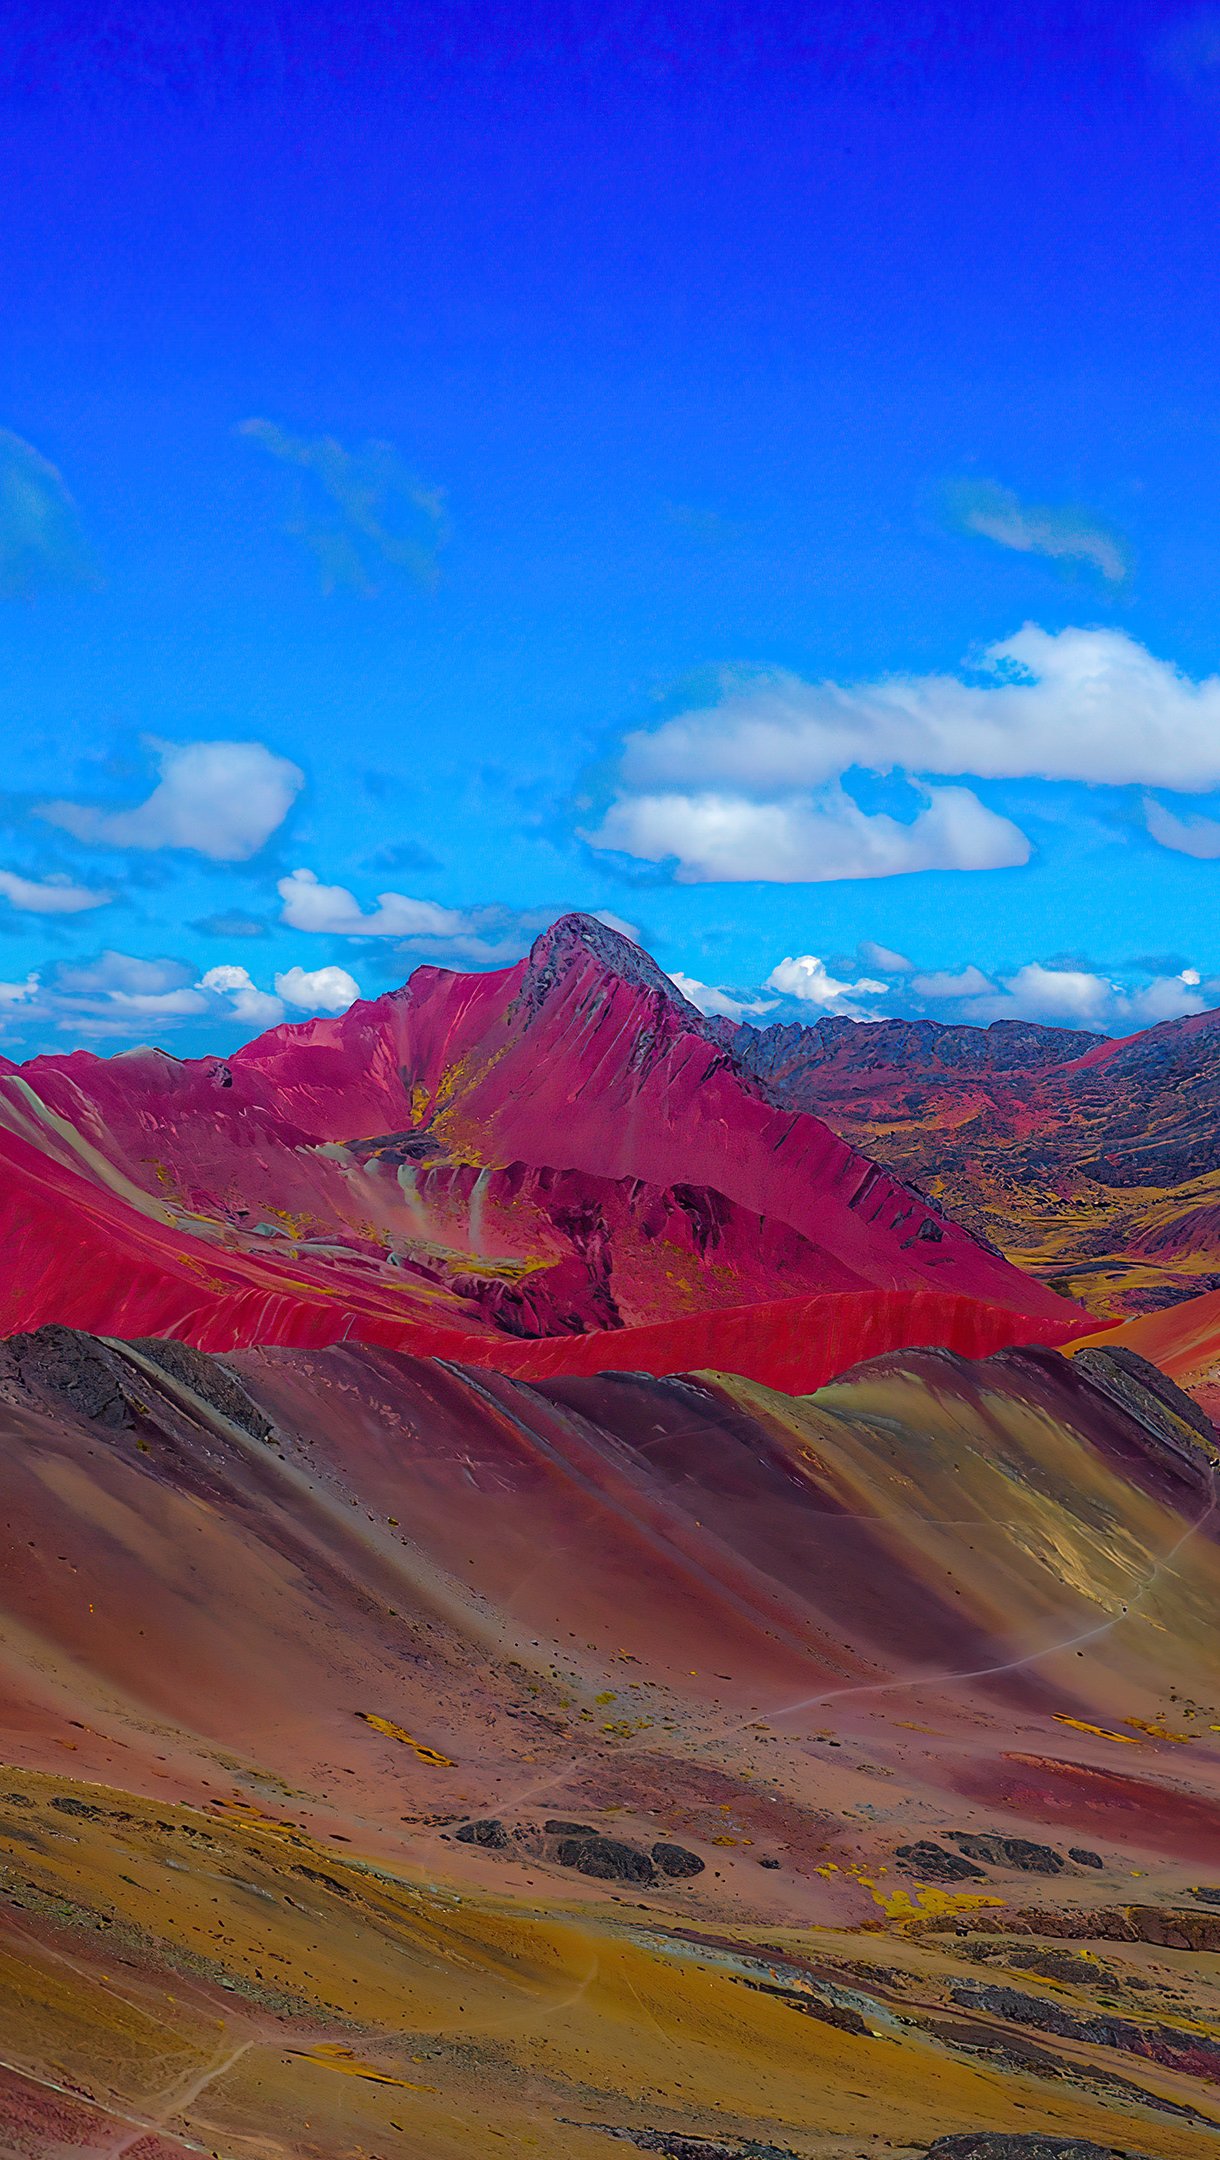 Rainbow mountains in Peru Wallpaper 4k Ultra HD ID:7493